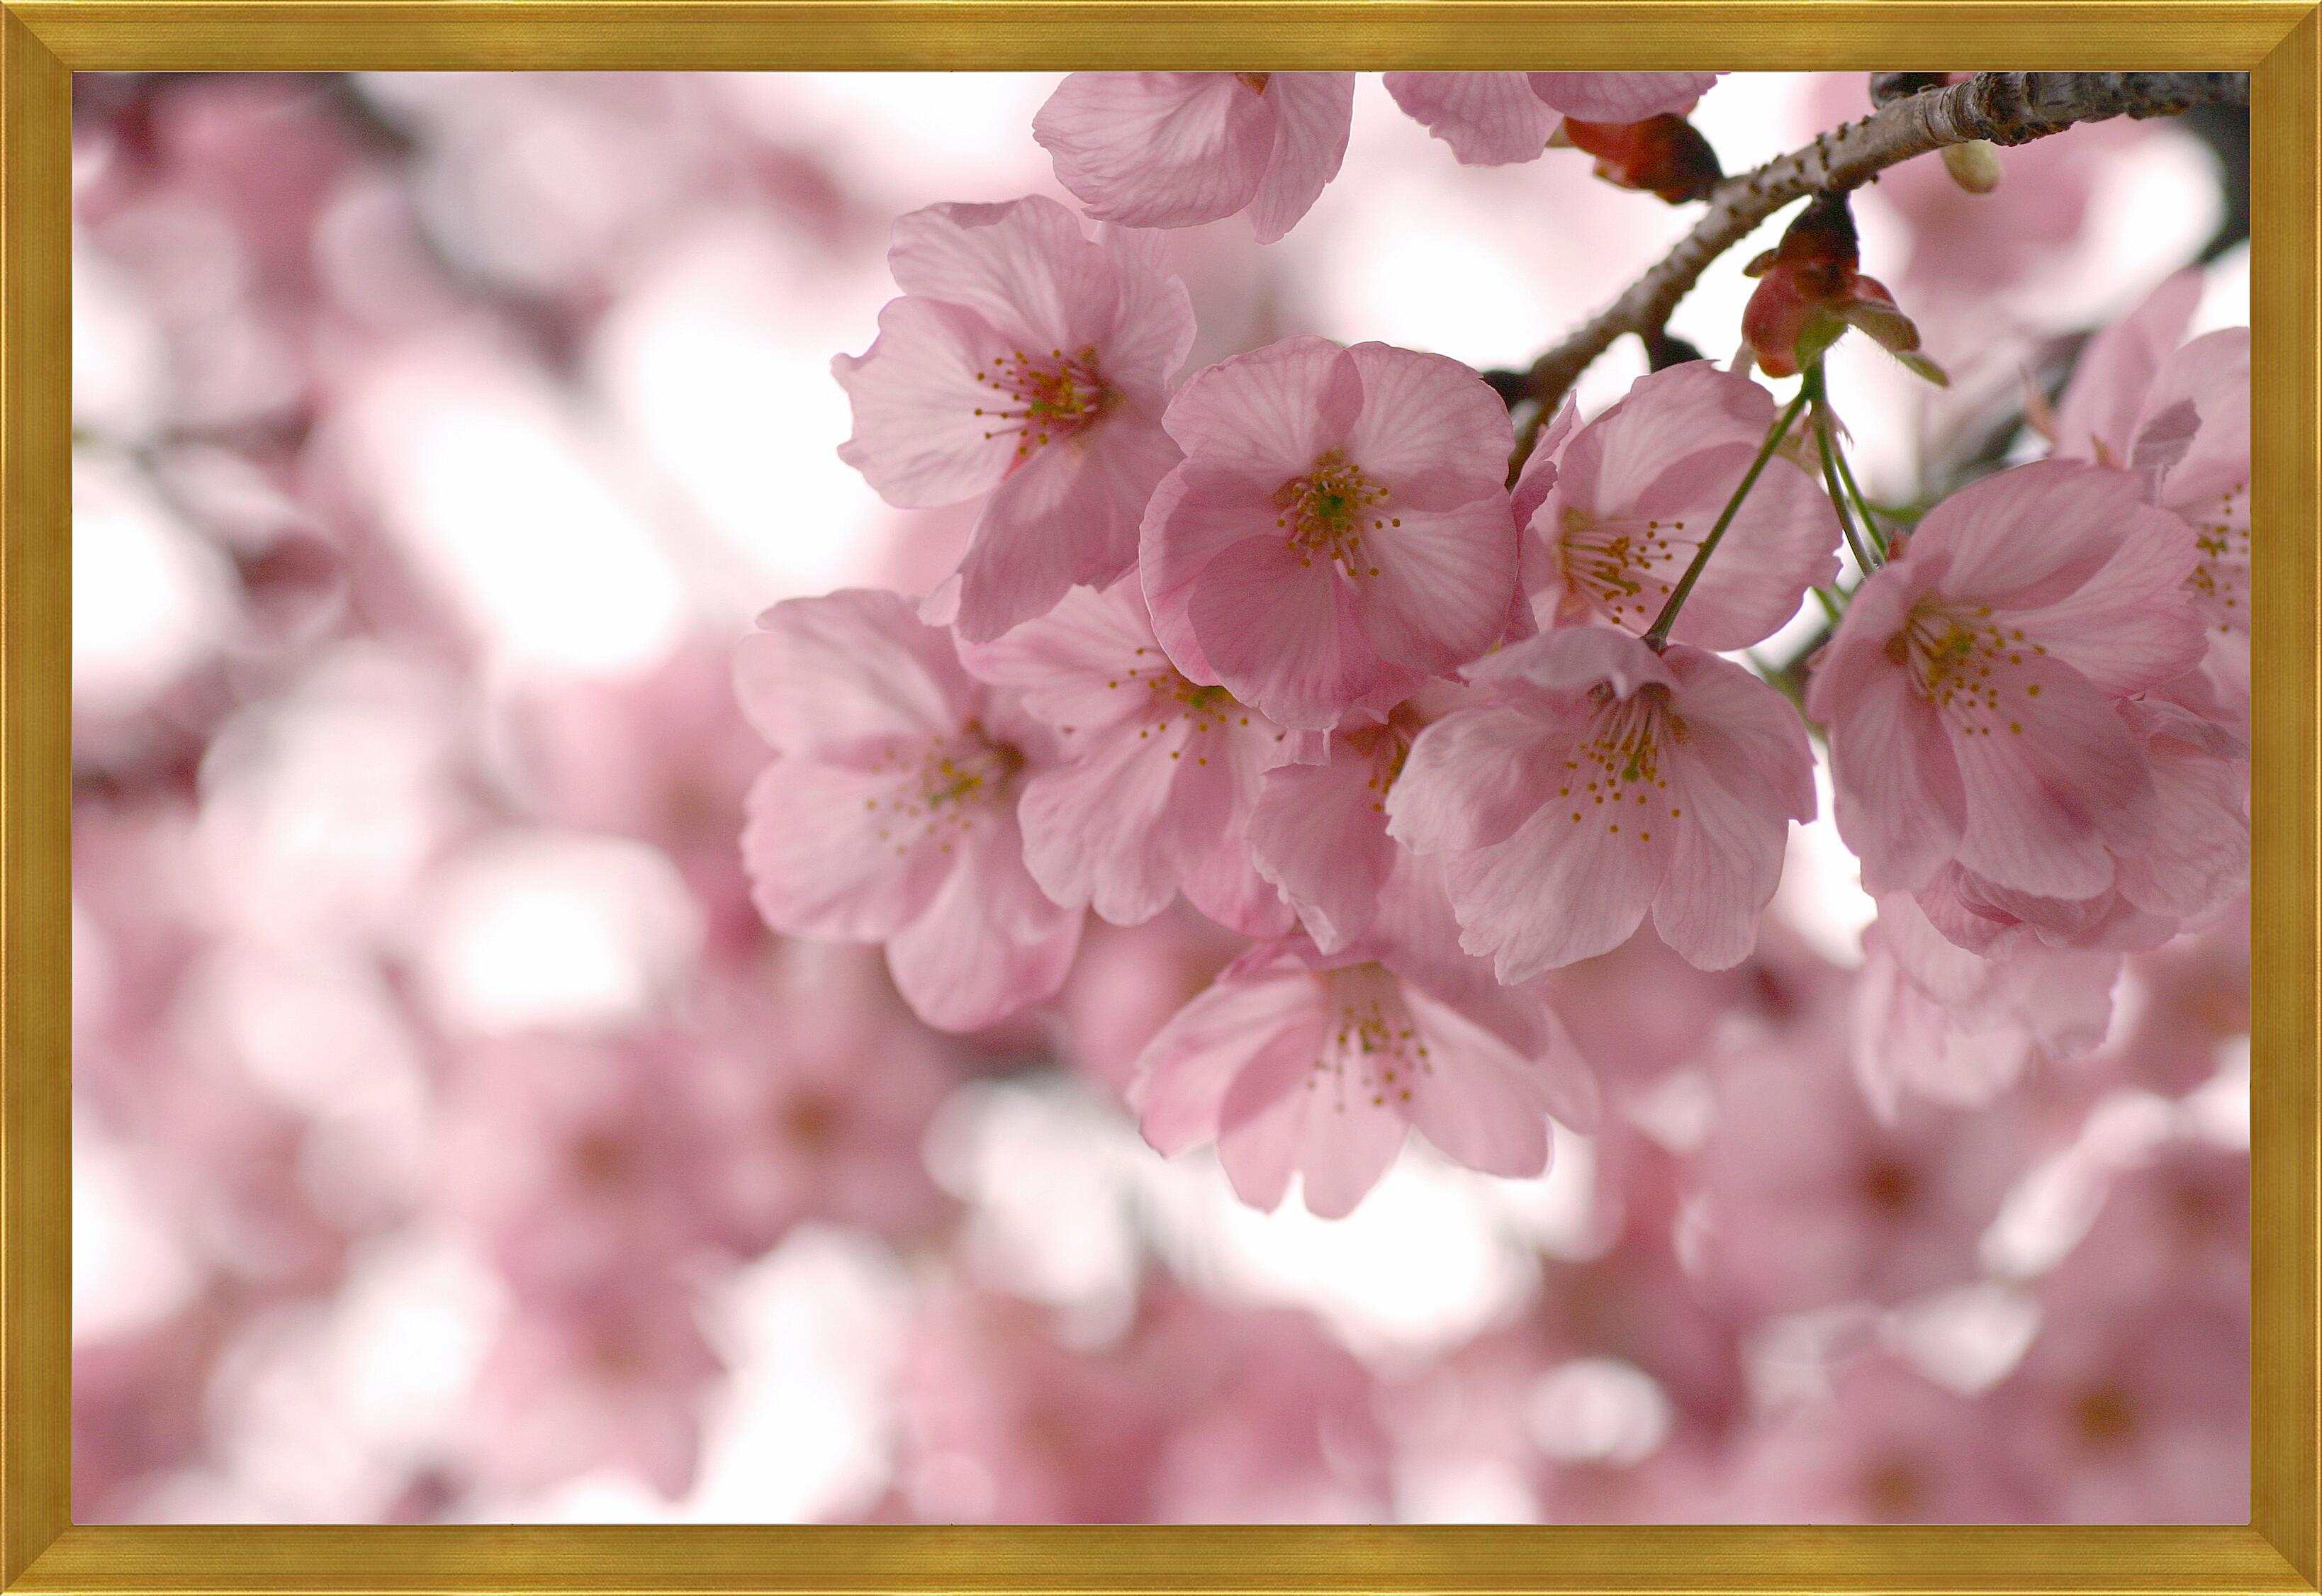 Bahor gullari. Цветы Сакуры. Розовые цветы. Нежные весенние цветы.